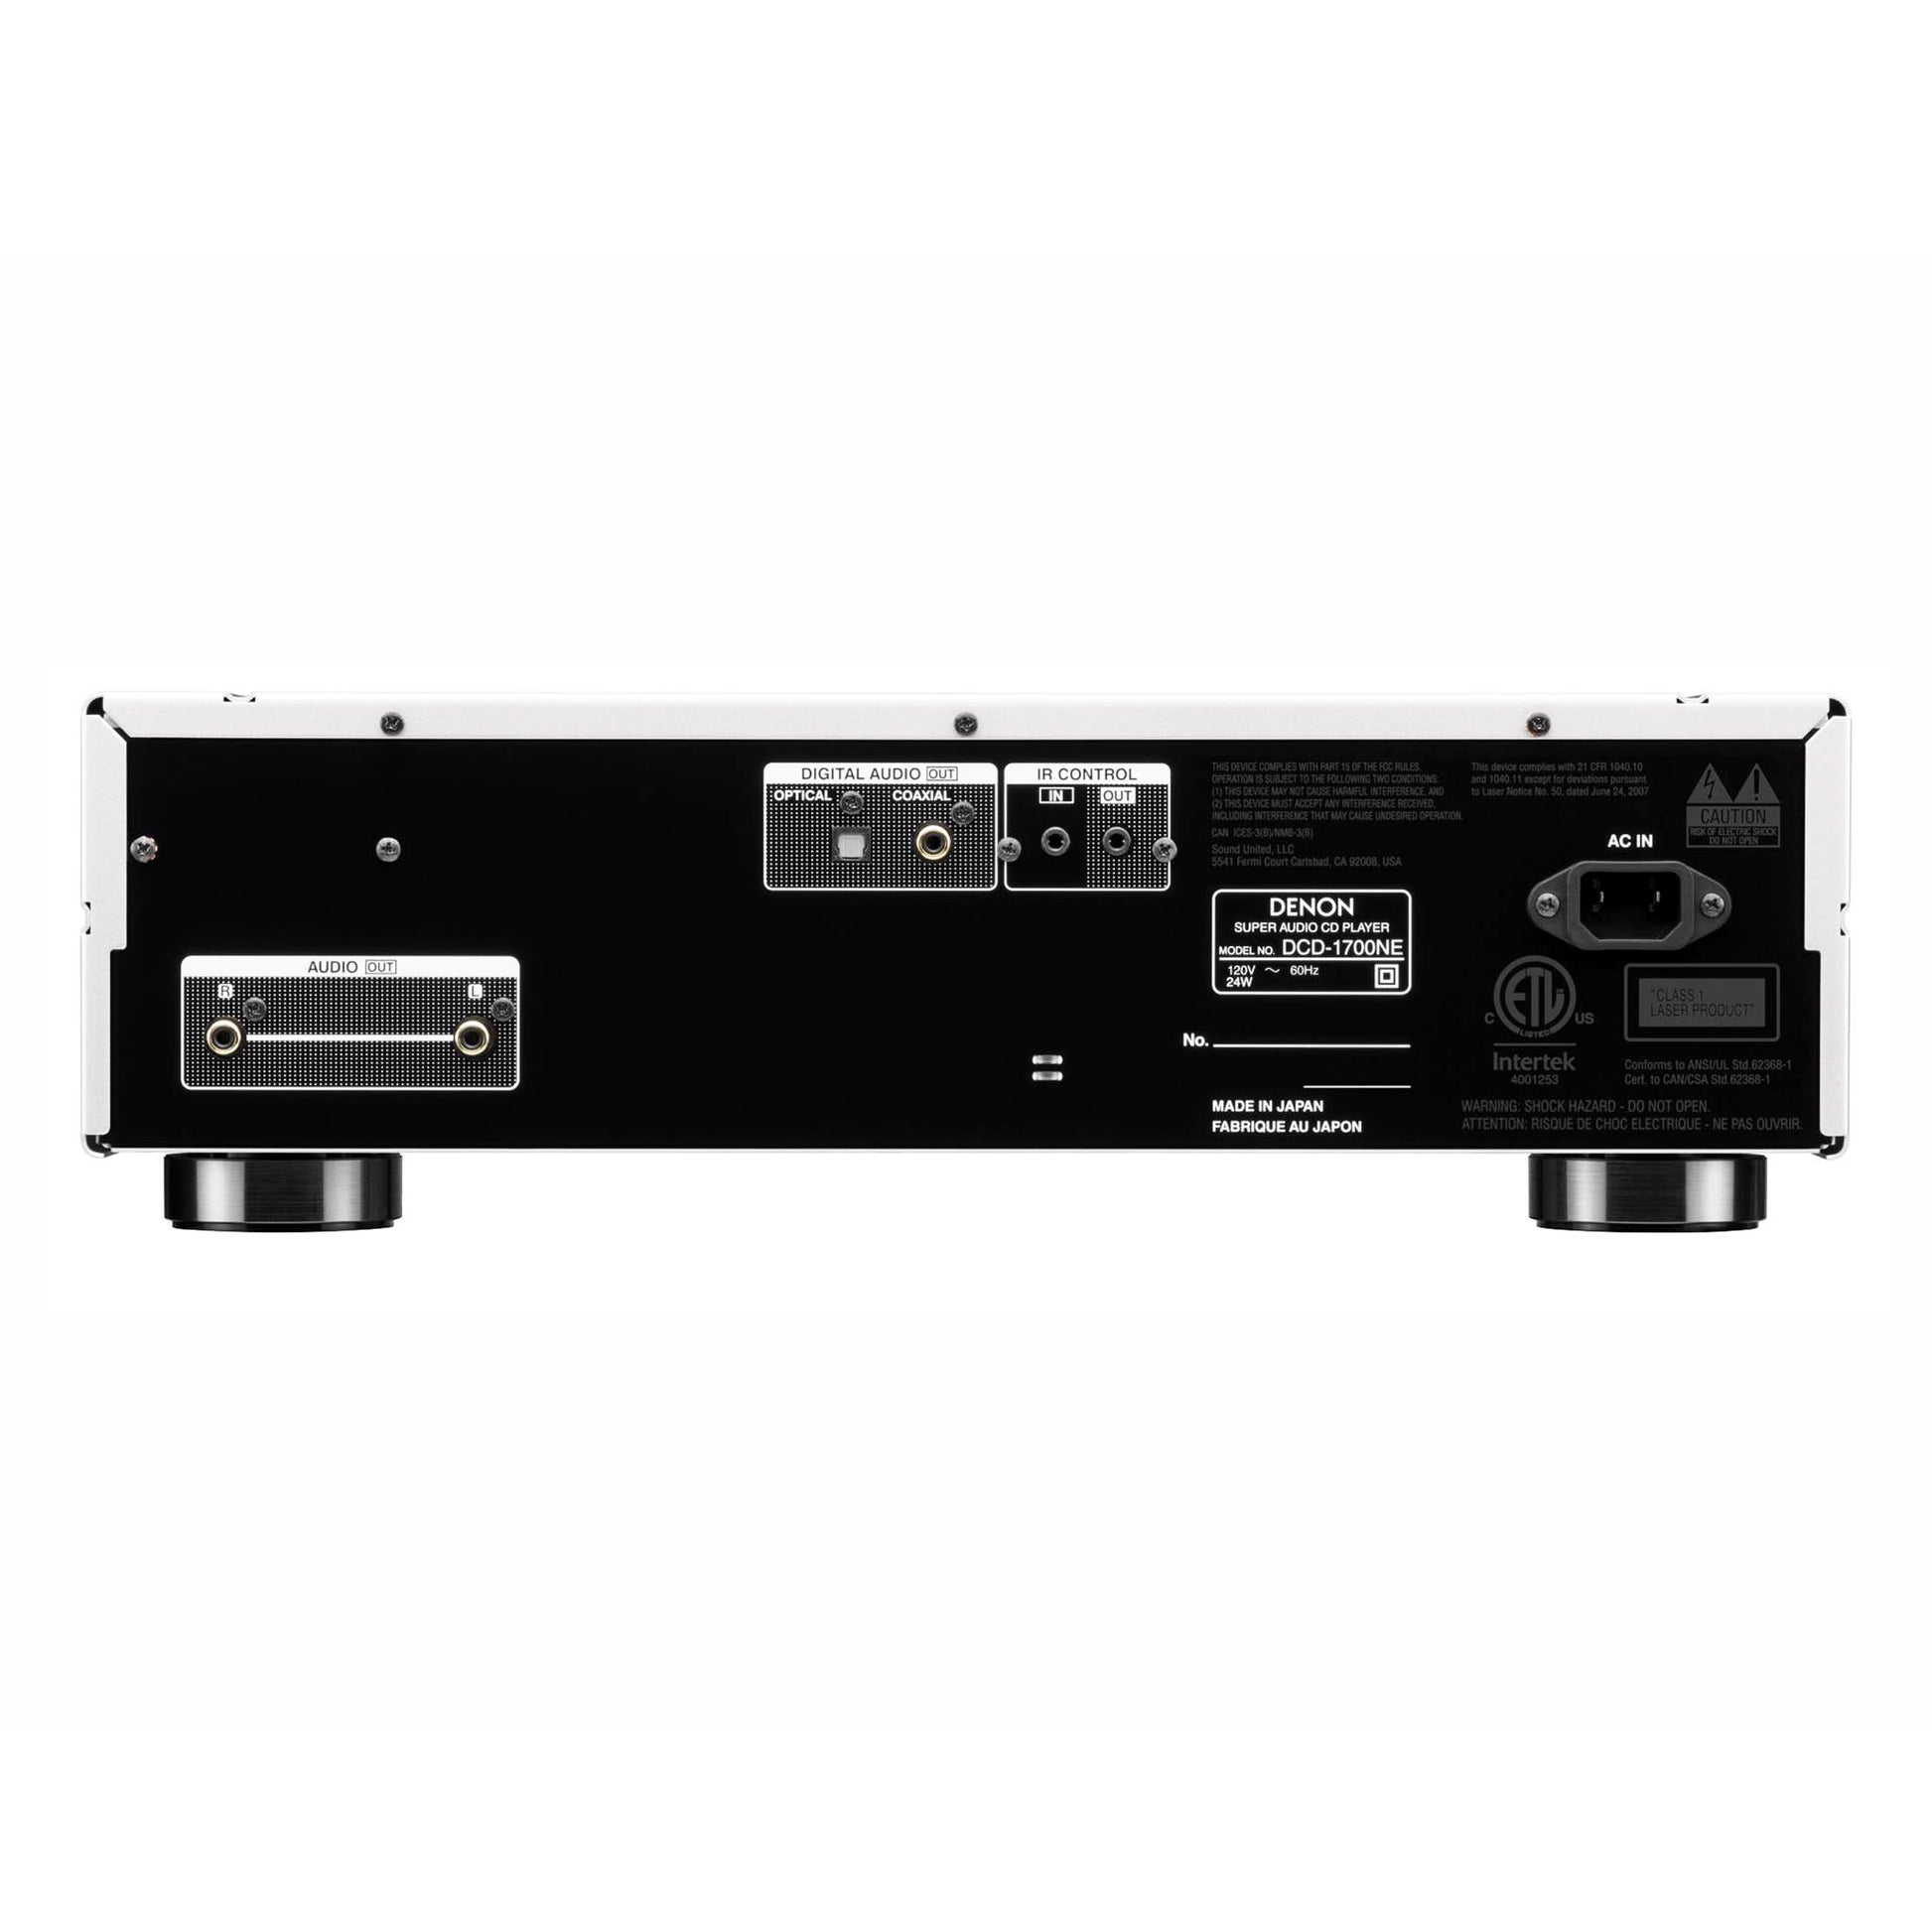 Denon DCD-1700NE SACD Upscale Audio Player –